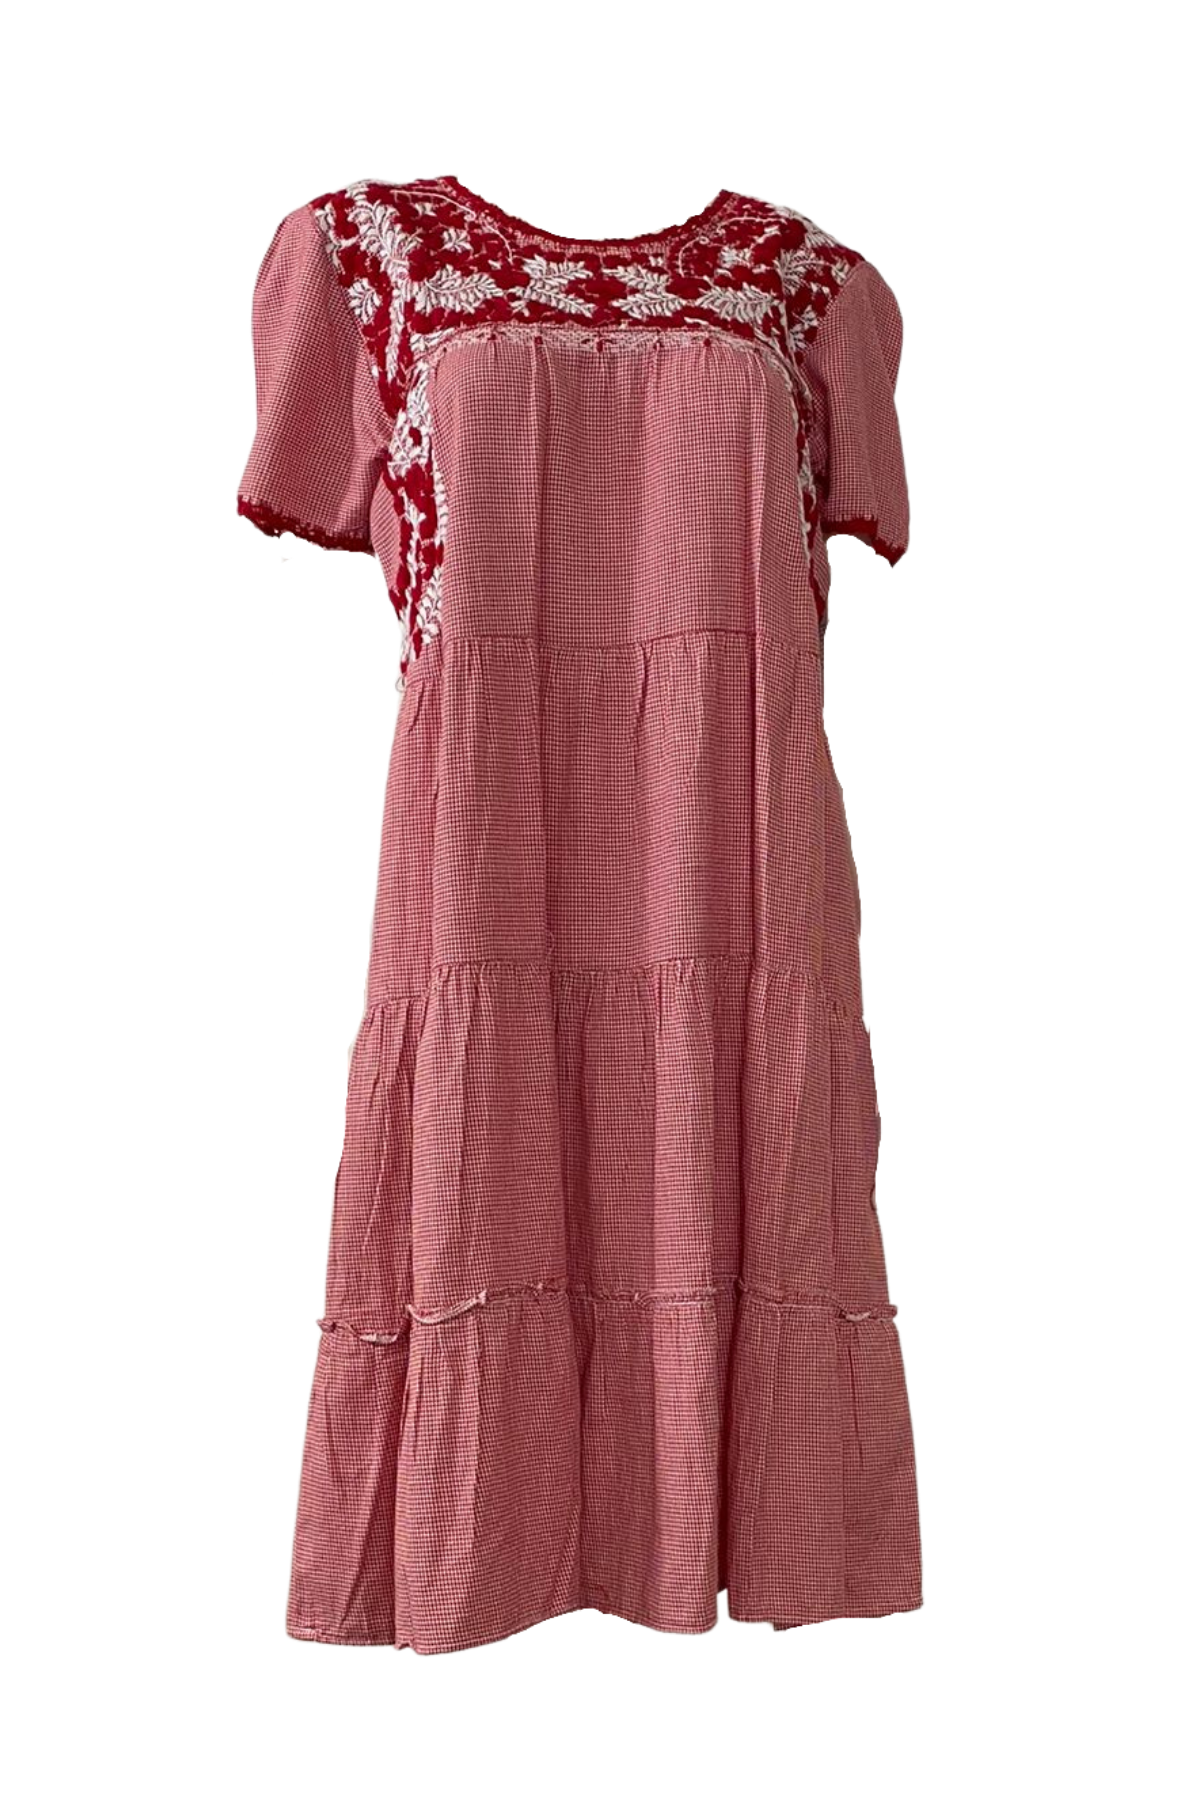 Americana Collection Dress